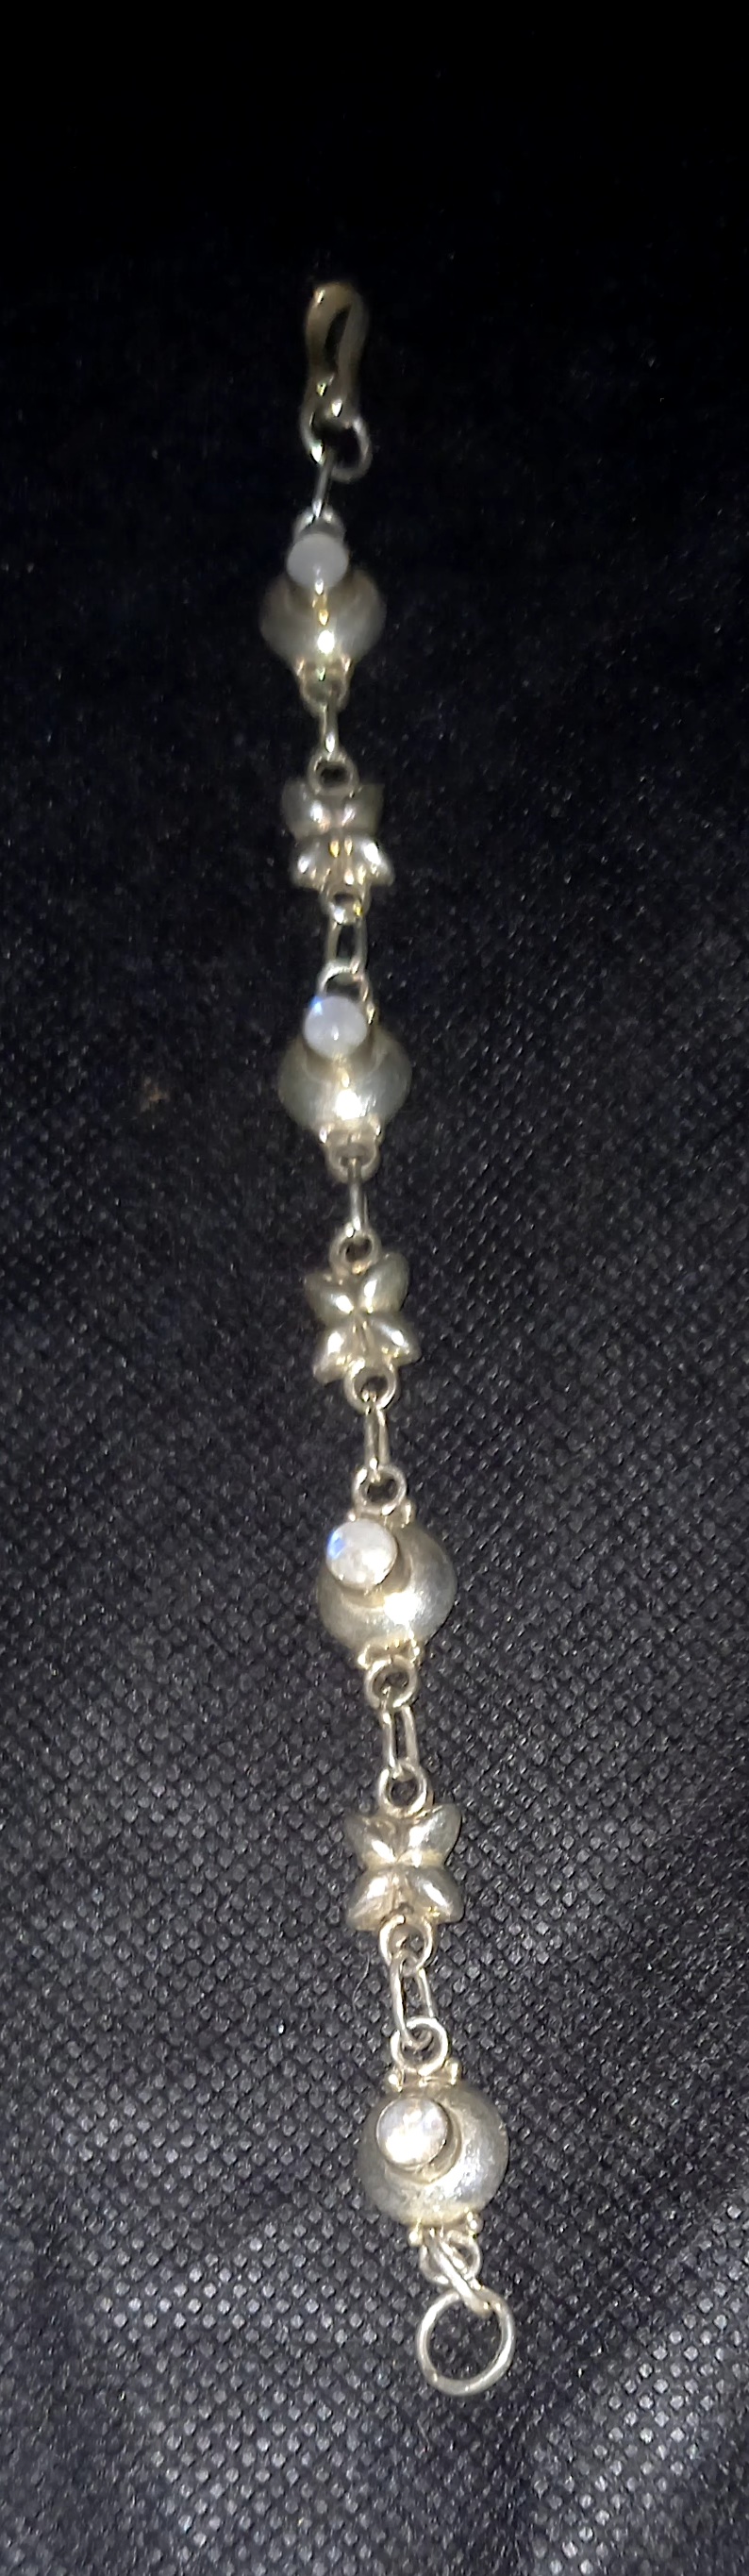 925 Silver Bracelet - Image 2 of 2